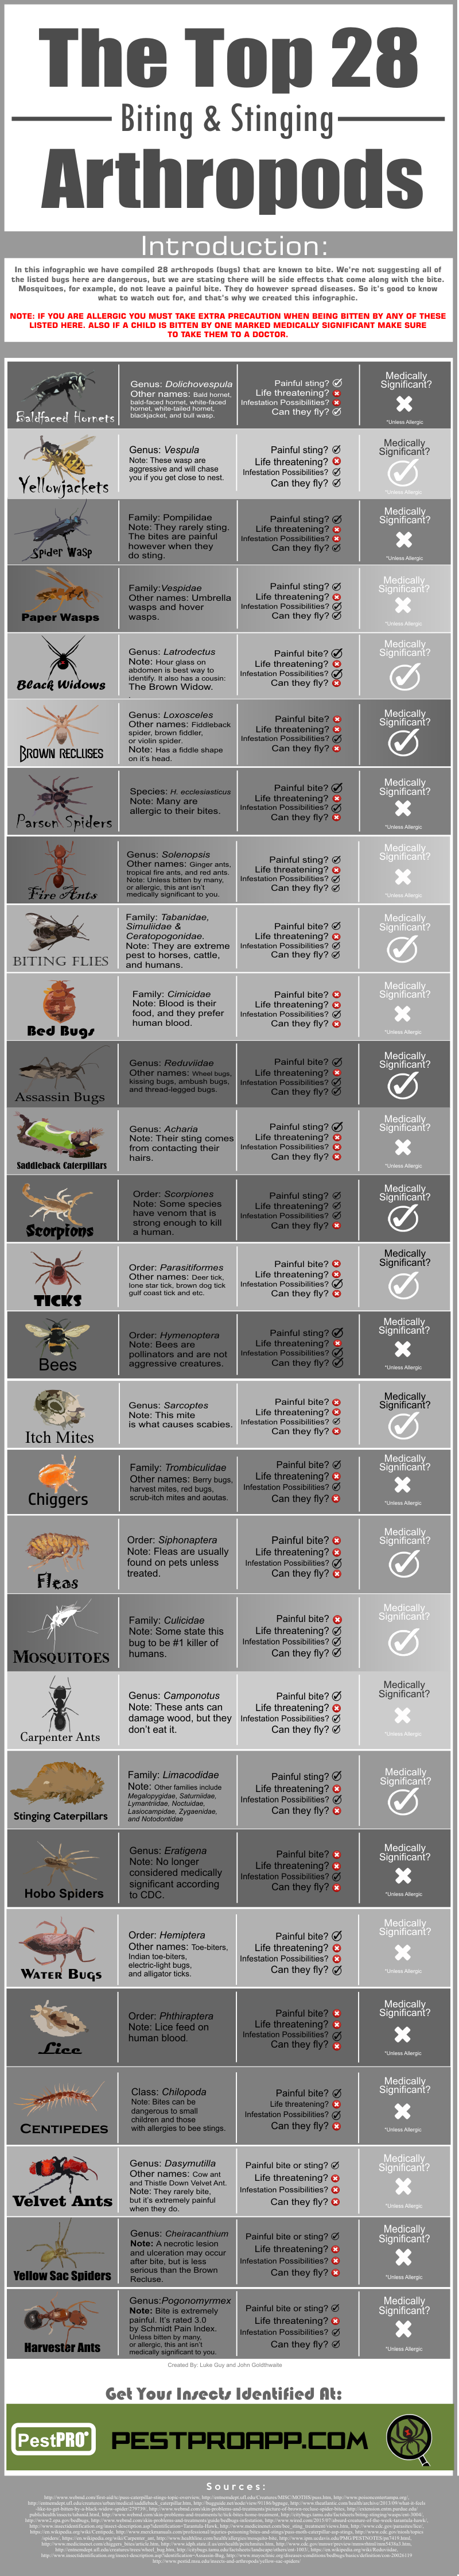 Top 28 Stinging Arthropods